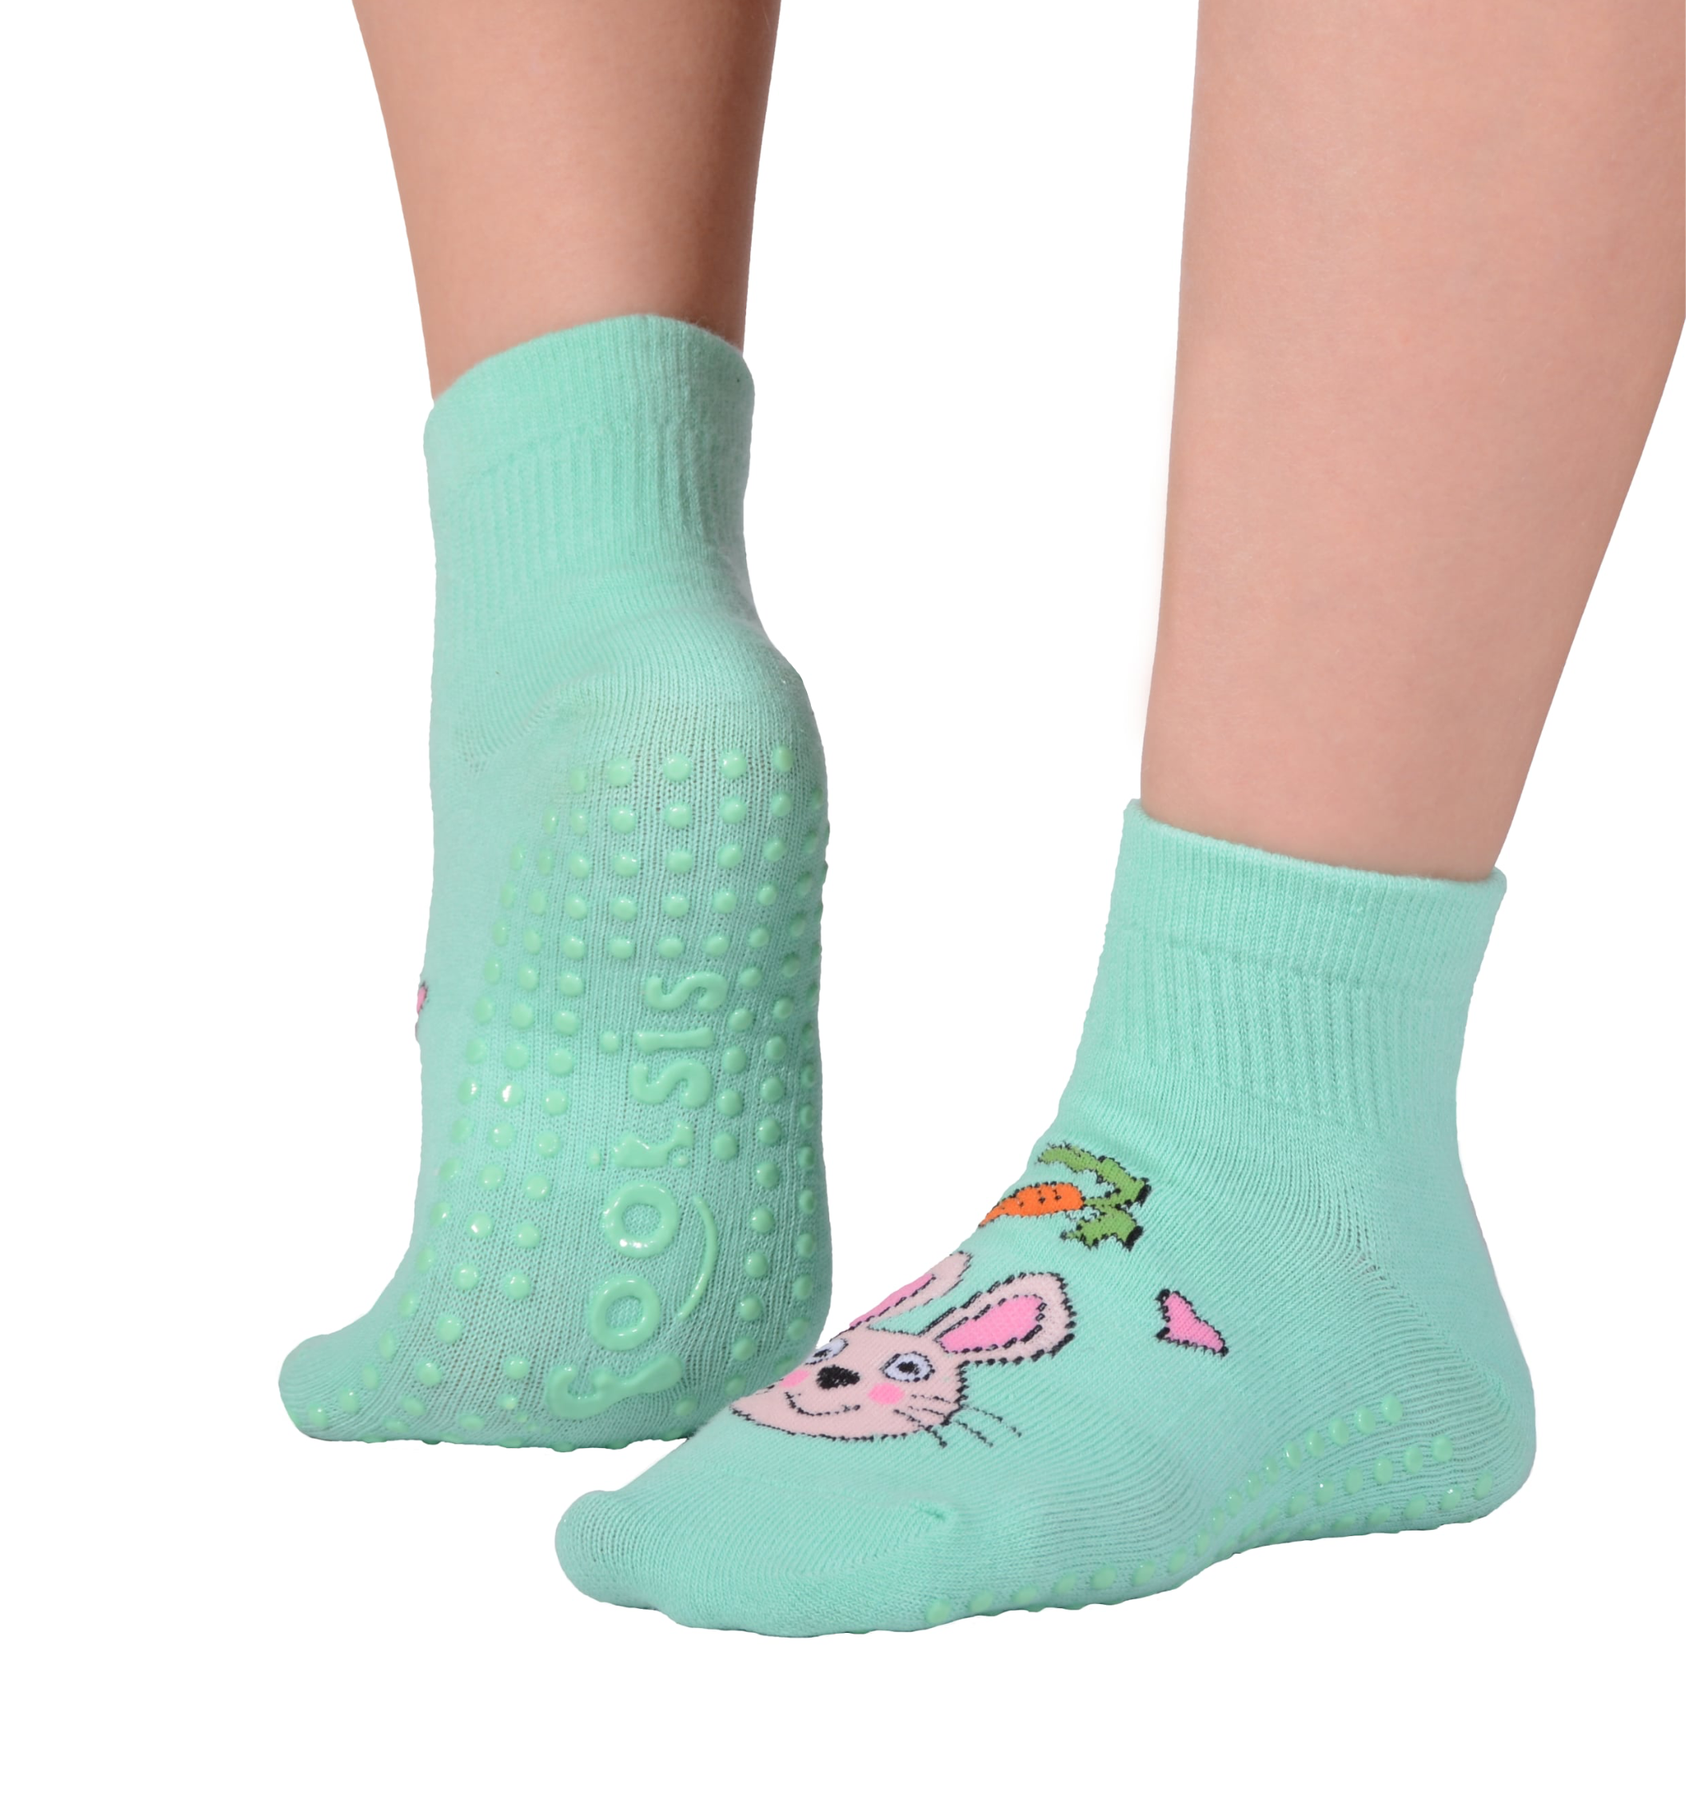  Grip Socks For Pilates, Yoga, Hospital, Barre